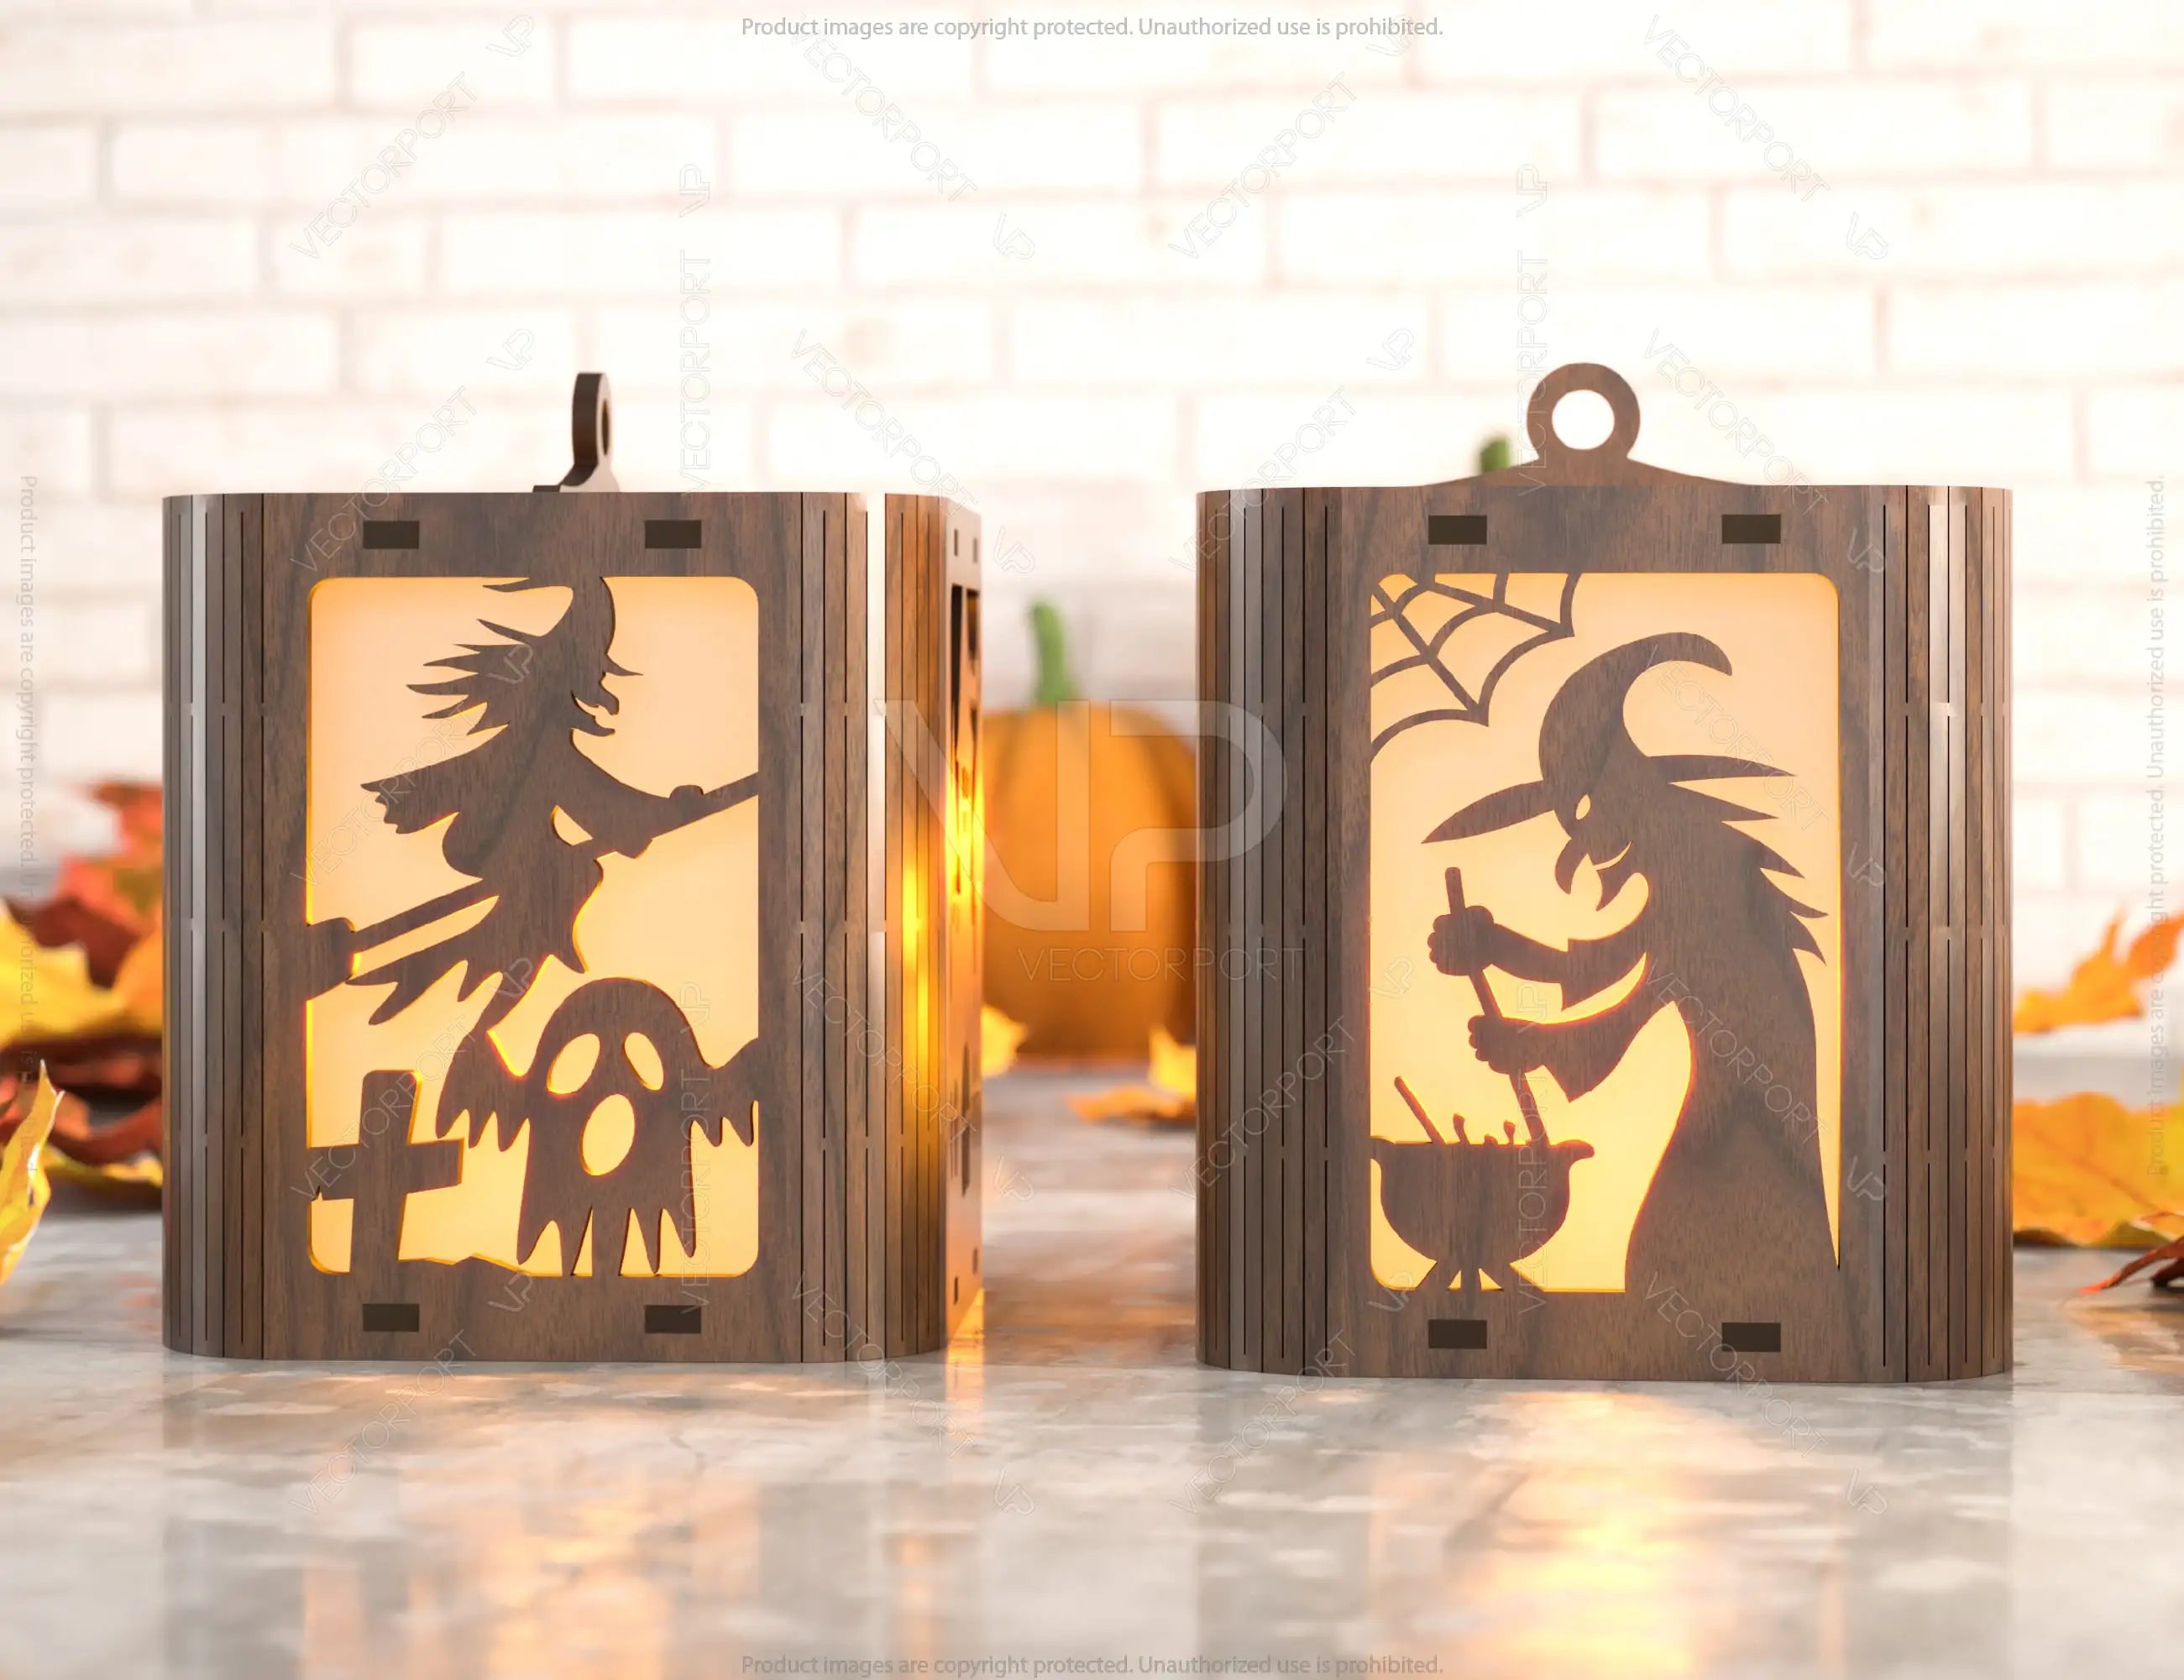 Spooky Scene Halloween Candle Holder Pumpkin Tealight Witch Spider Lantern Lamp Hanging Tree Decoration Candle Holder Digital Download |#235|